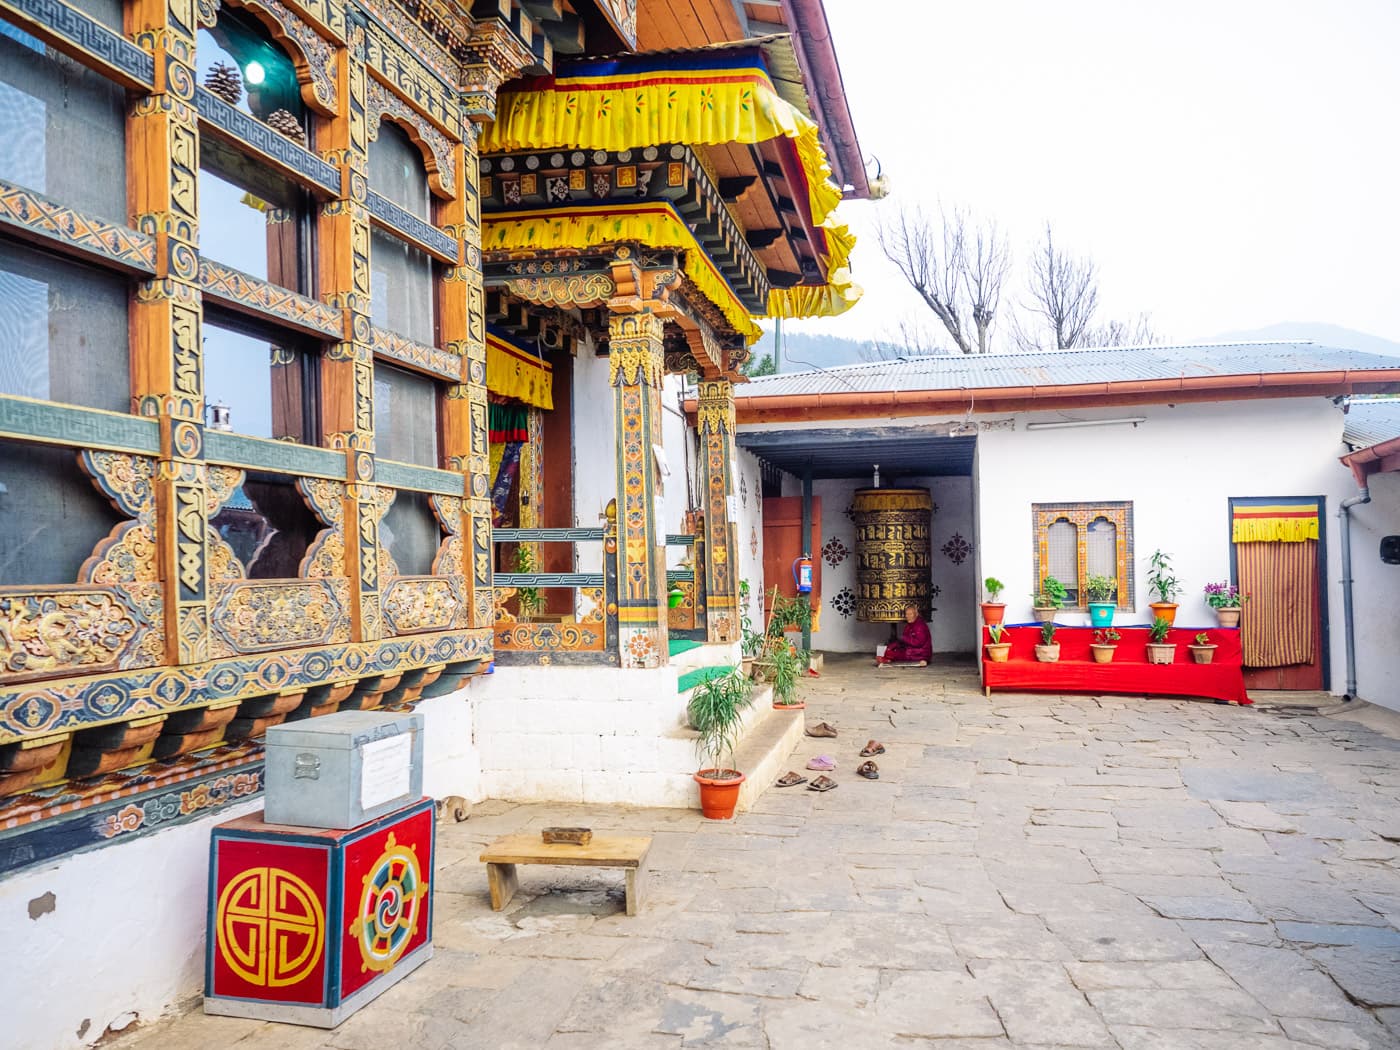 Chhimi Lhakhang (Fertility Temple)